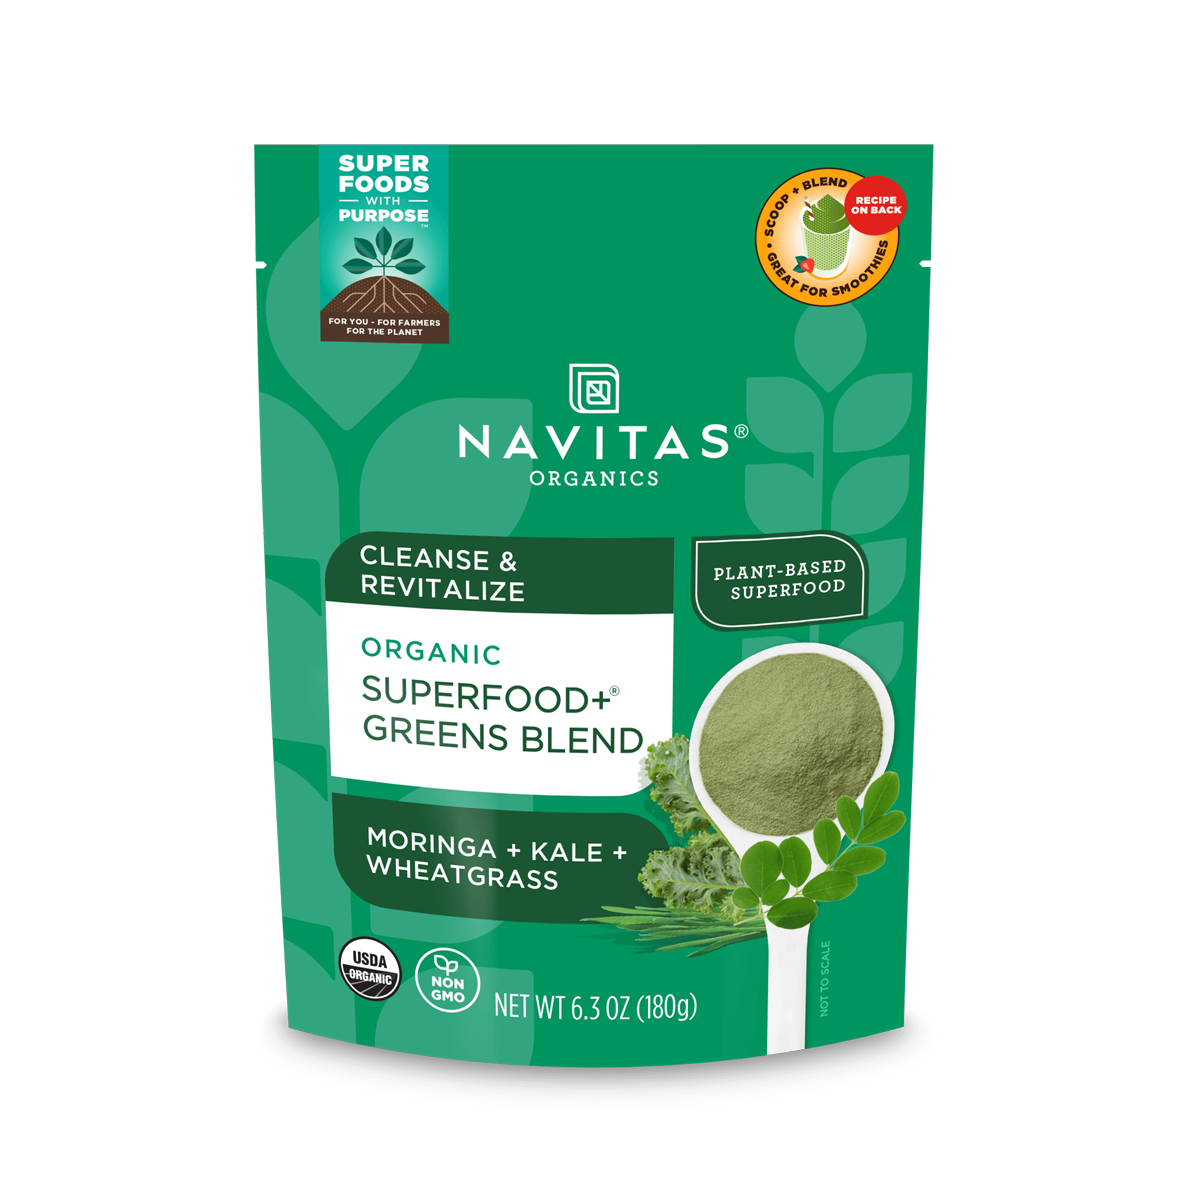 Navitas Organics Superfood+ Greens Blend front of bag